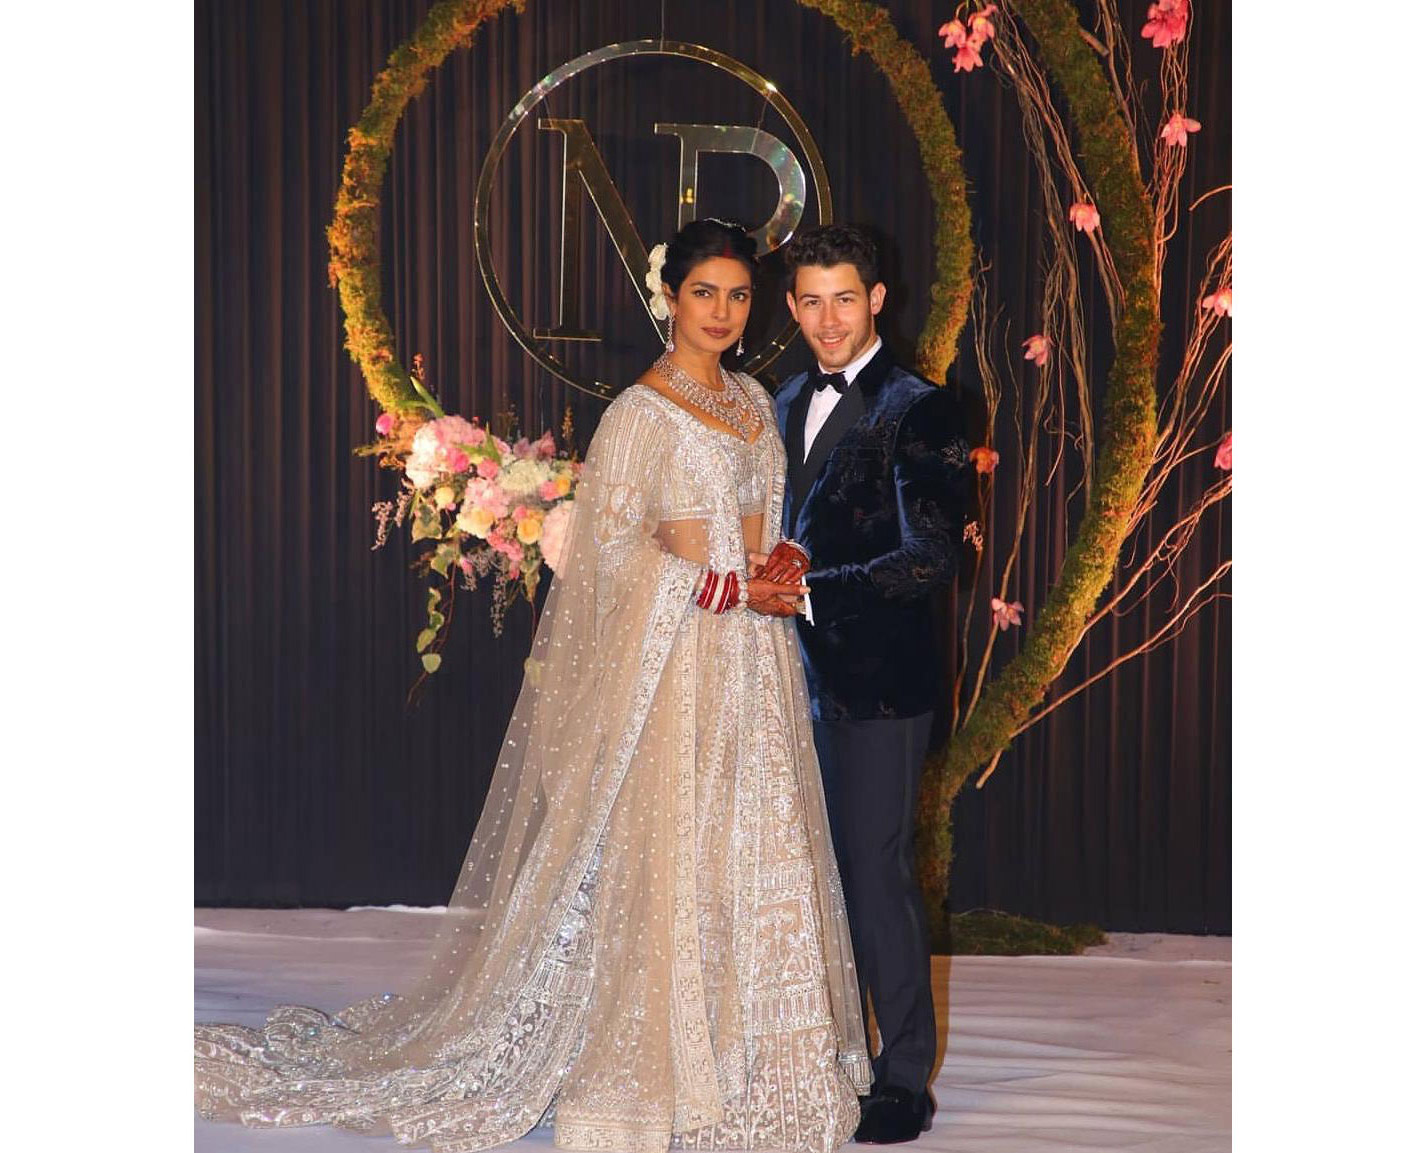 All about the wedding of Nick Jonas and Priyanka Chopra